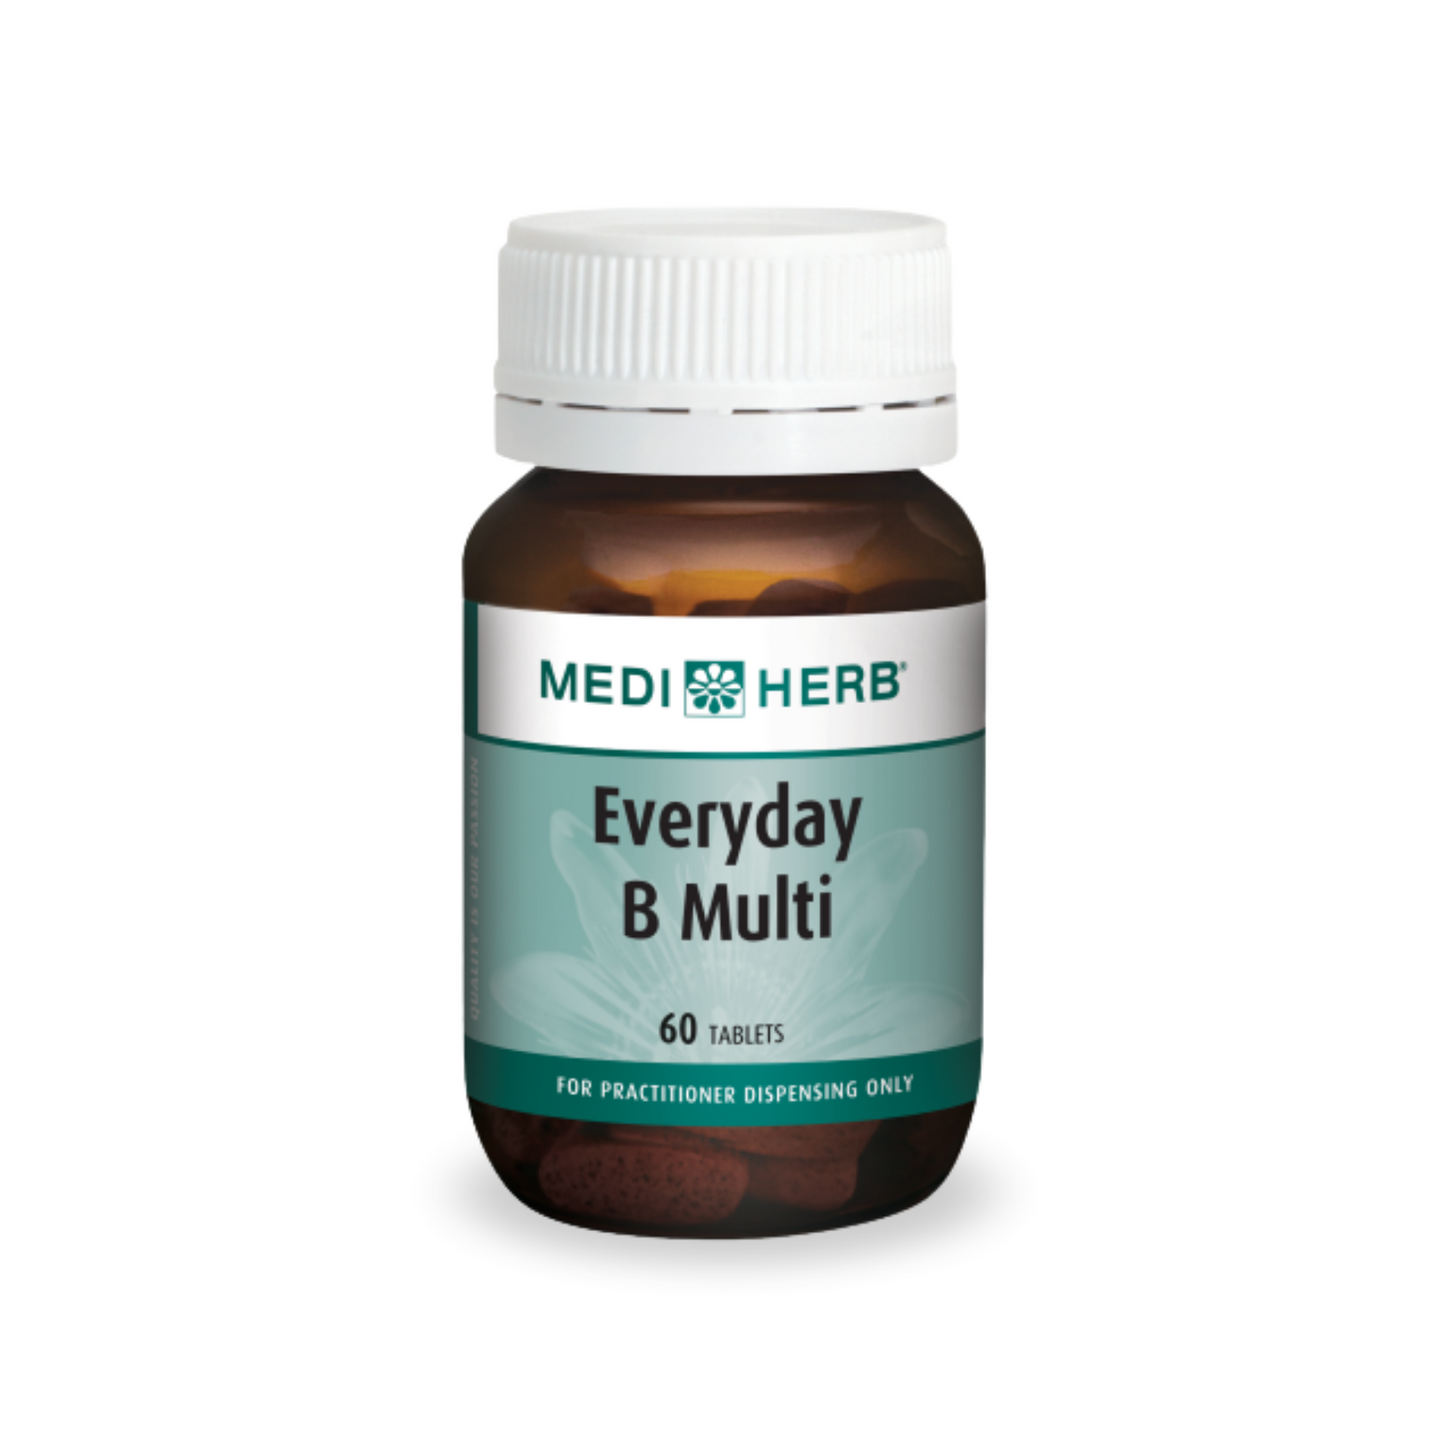 MediHerb Everyday B Multi